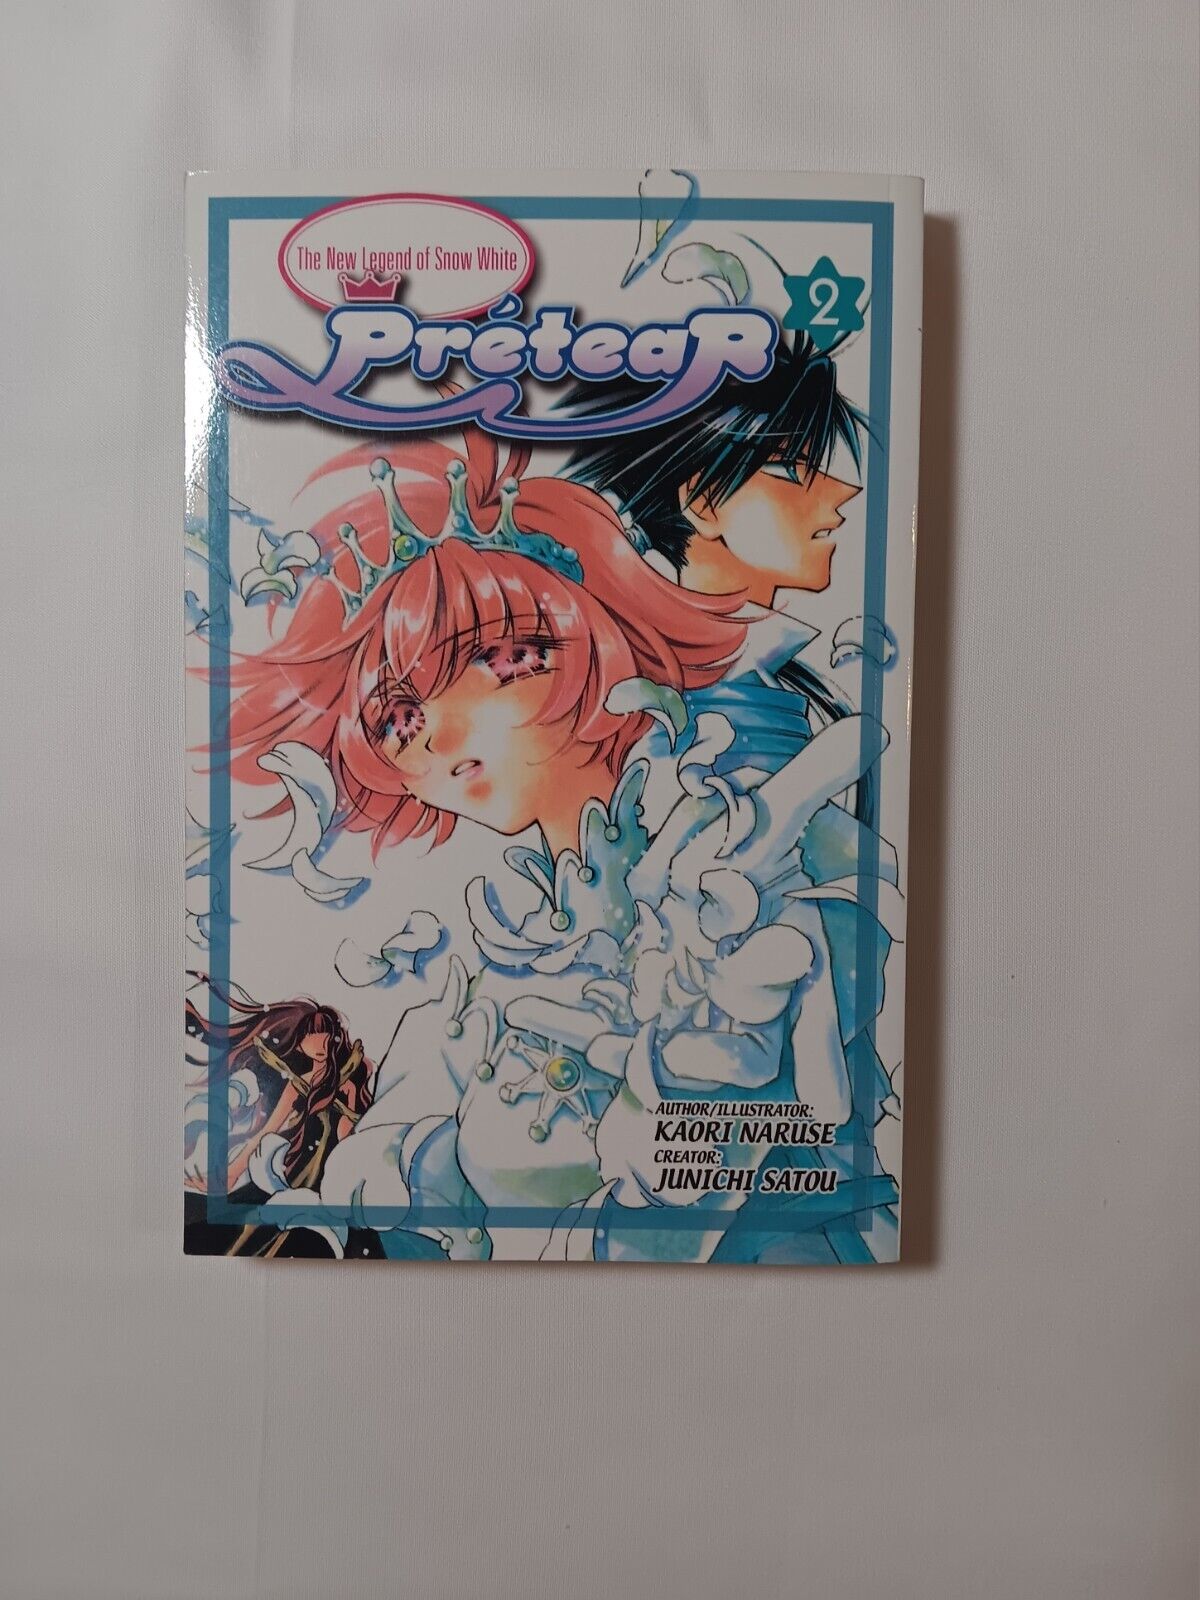 Pretear Volume 2 English Manga By Kaori Naruse and Junichi Satou (English, 2005)